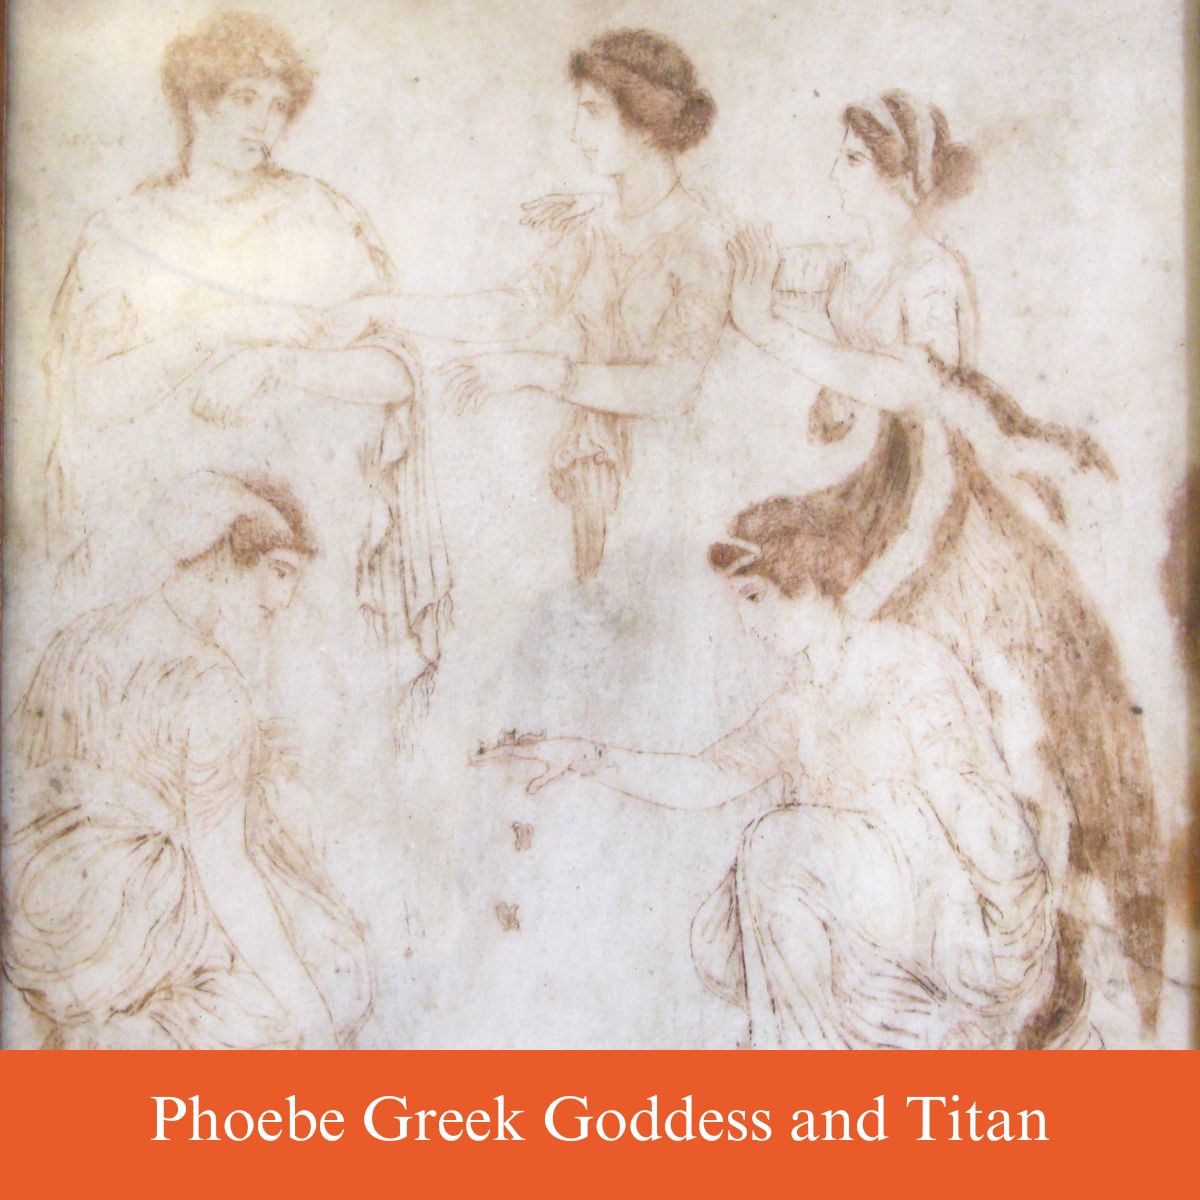 phoebe greek goddess